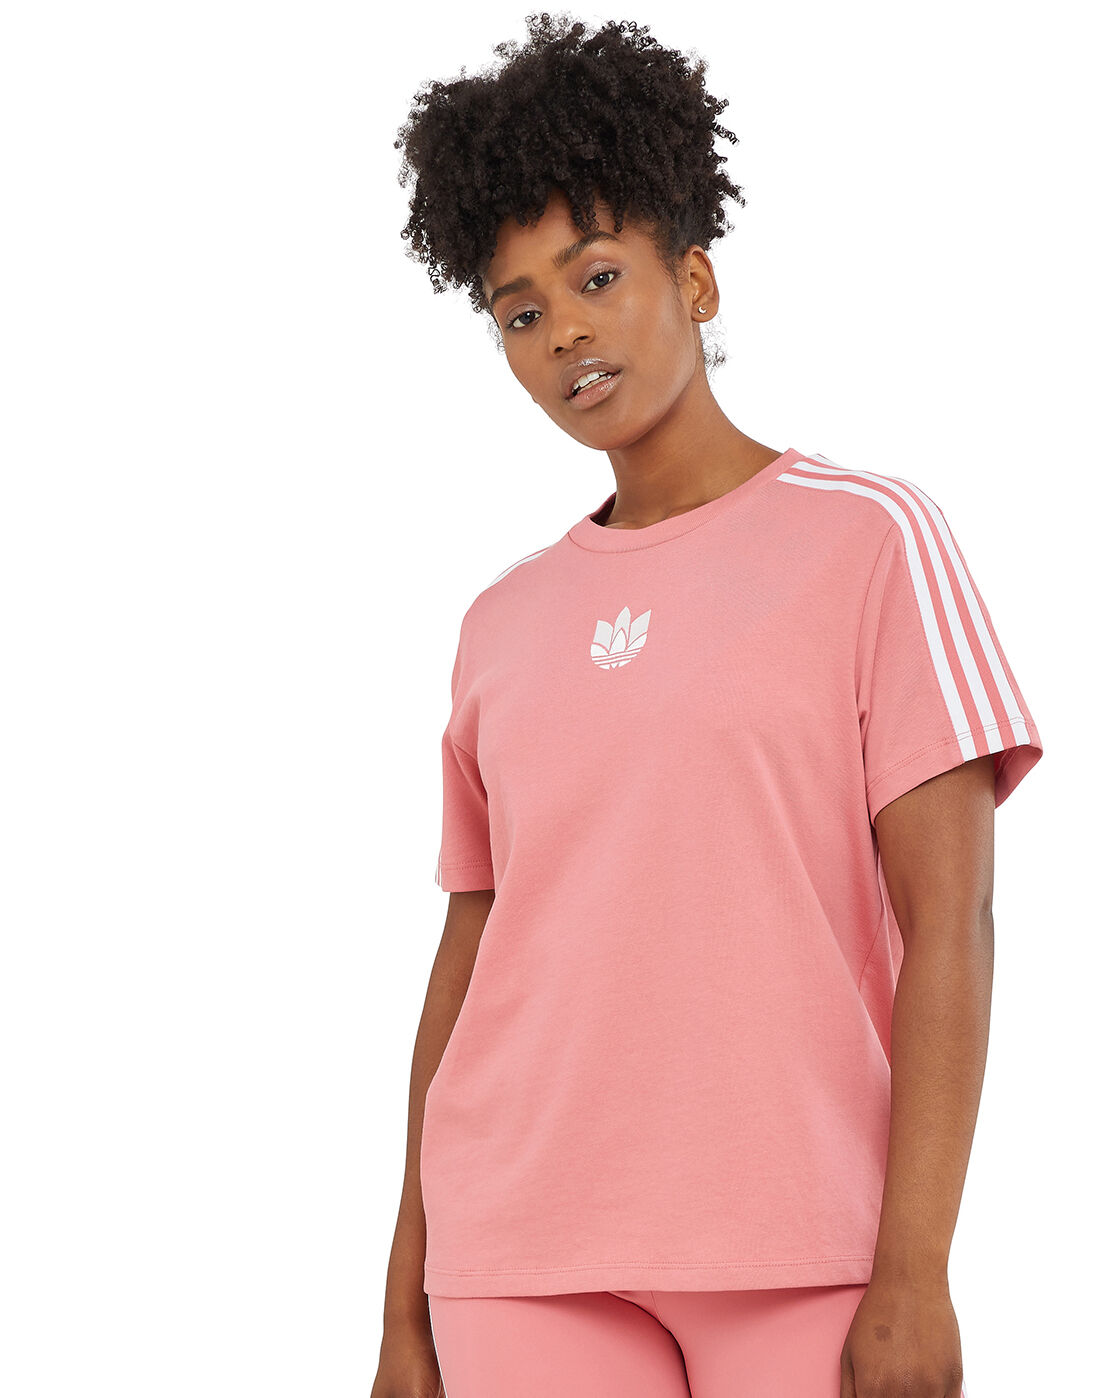 pink shirt womens uk